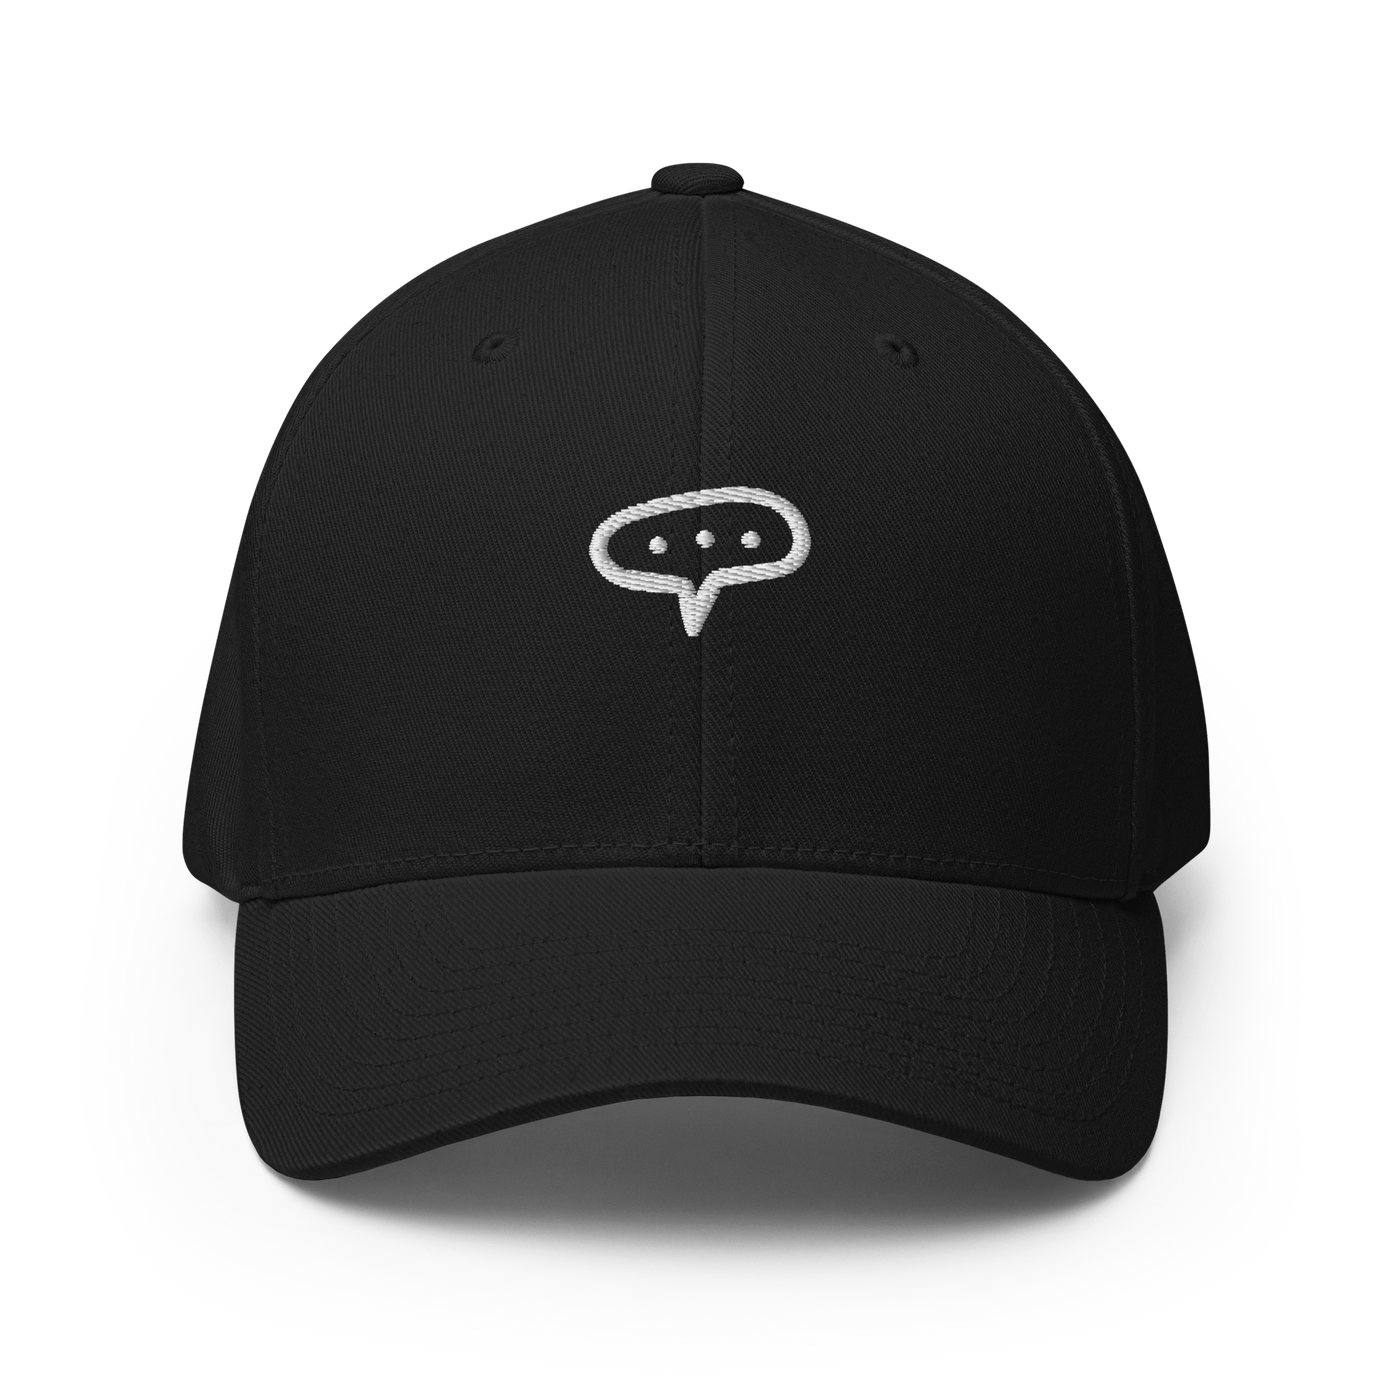 Thinking Flexfit Cap - Dark Navy - S/M - Just Another Cap Store